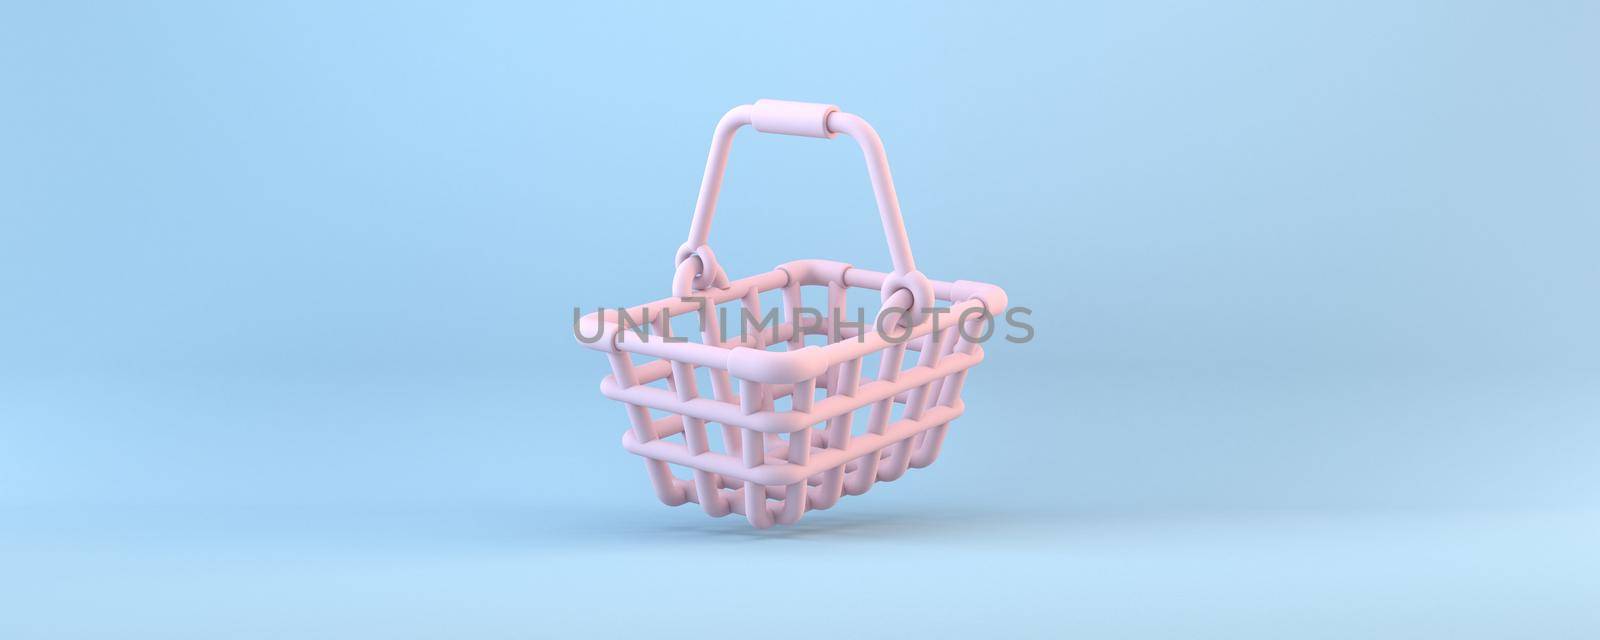 Pink shopping basket 3D rendering illustration isolated on blue background